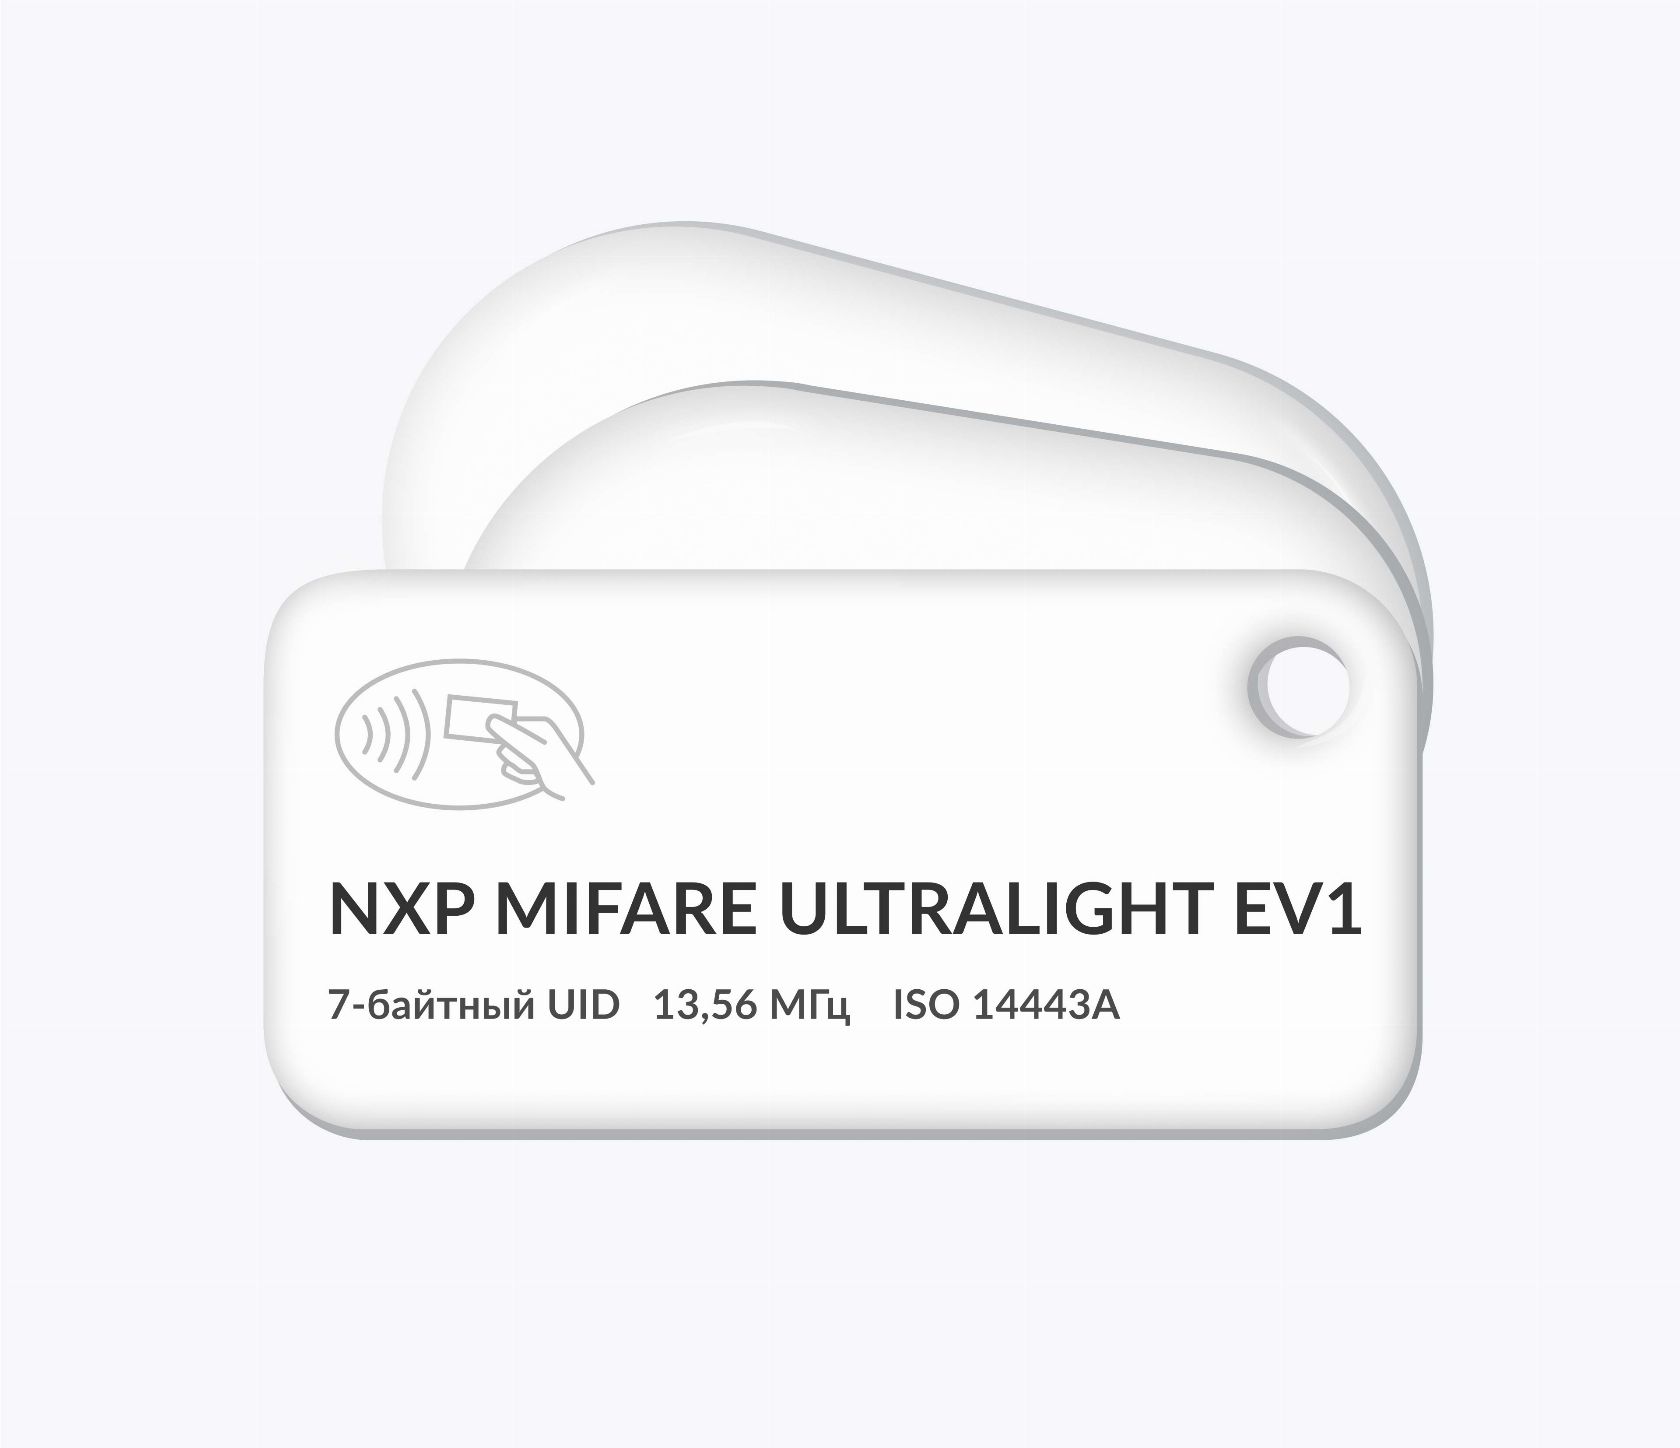 RFID-брелоки NEOKEY® с чипом NXP MIFARE Ultralight EV1 7 byte UID и вашим логотипом